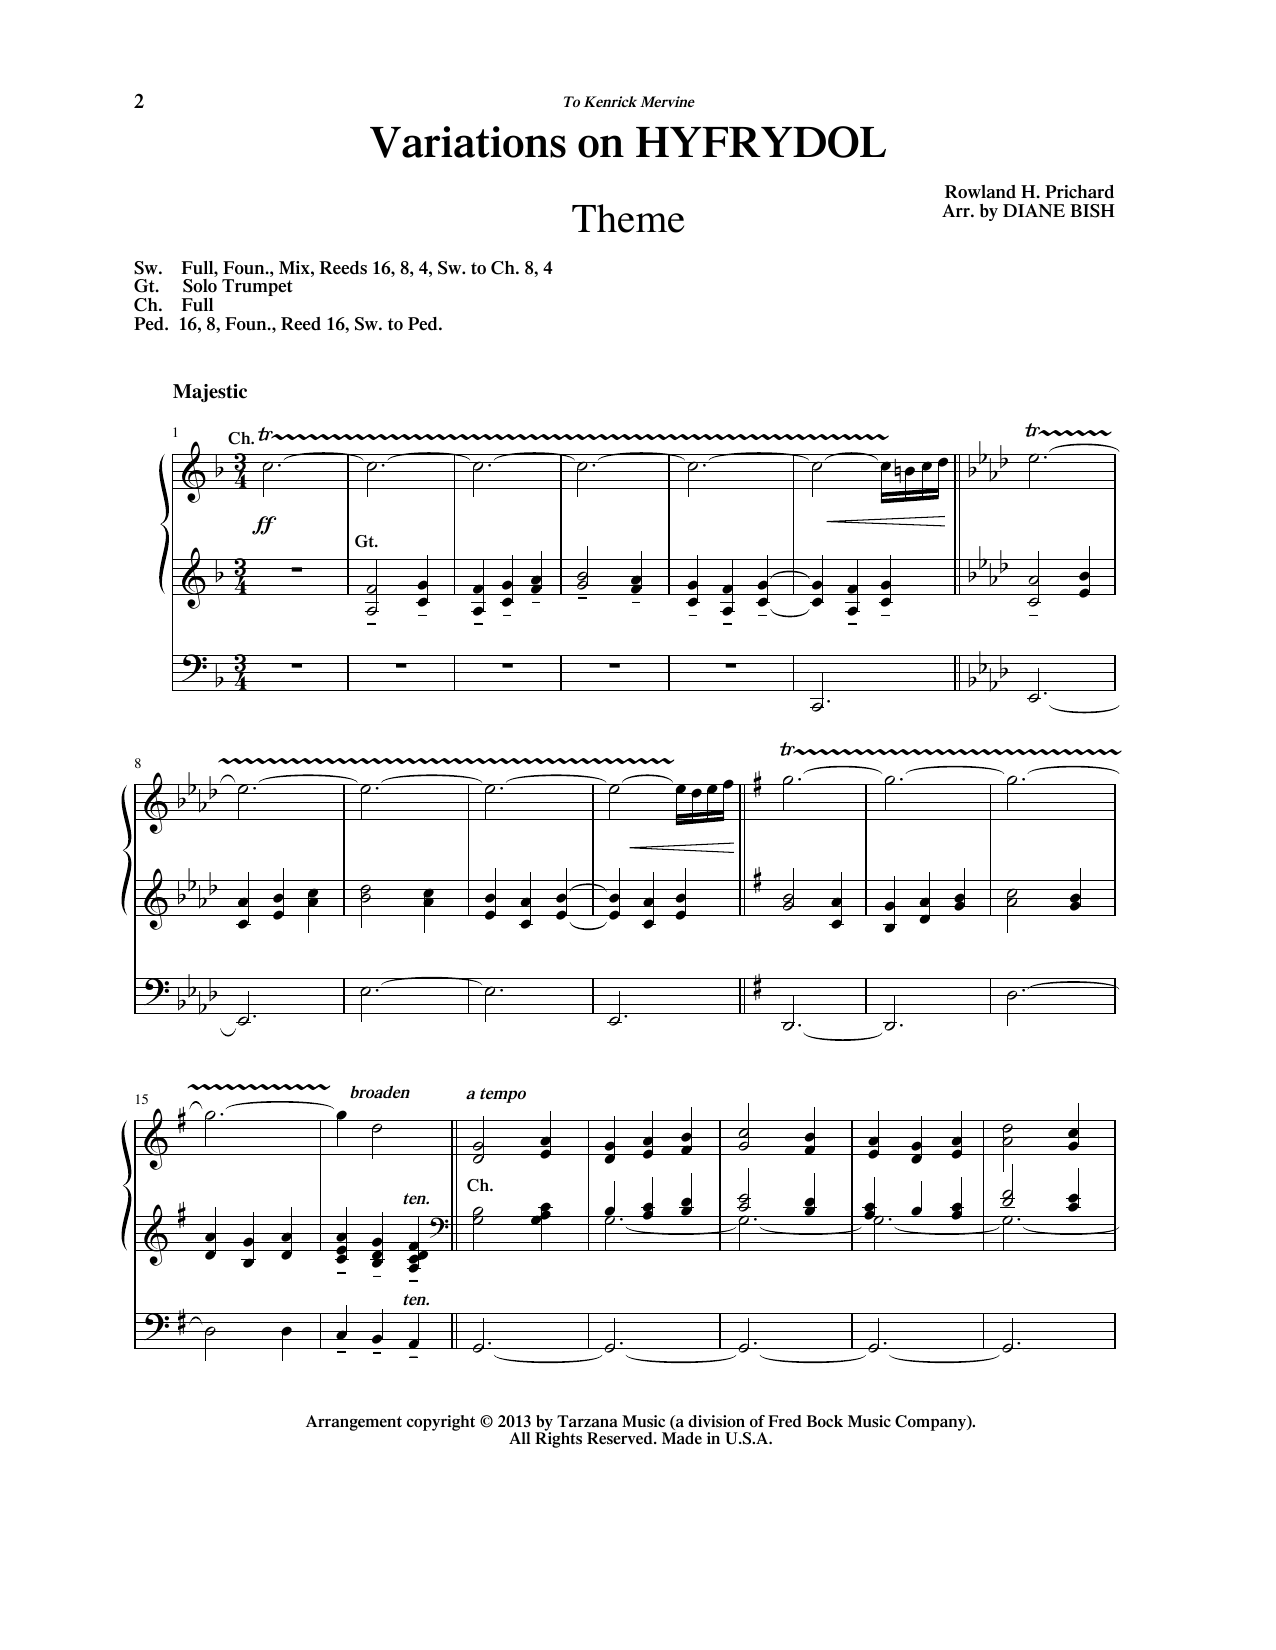 Rowland H. Prichard Variations on Hyfrydol (arr. Diane Bish) sheet music notes and chords arranged for Organ